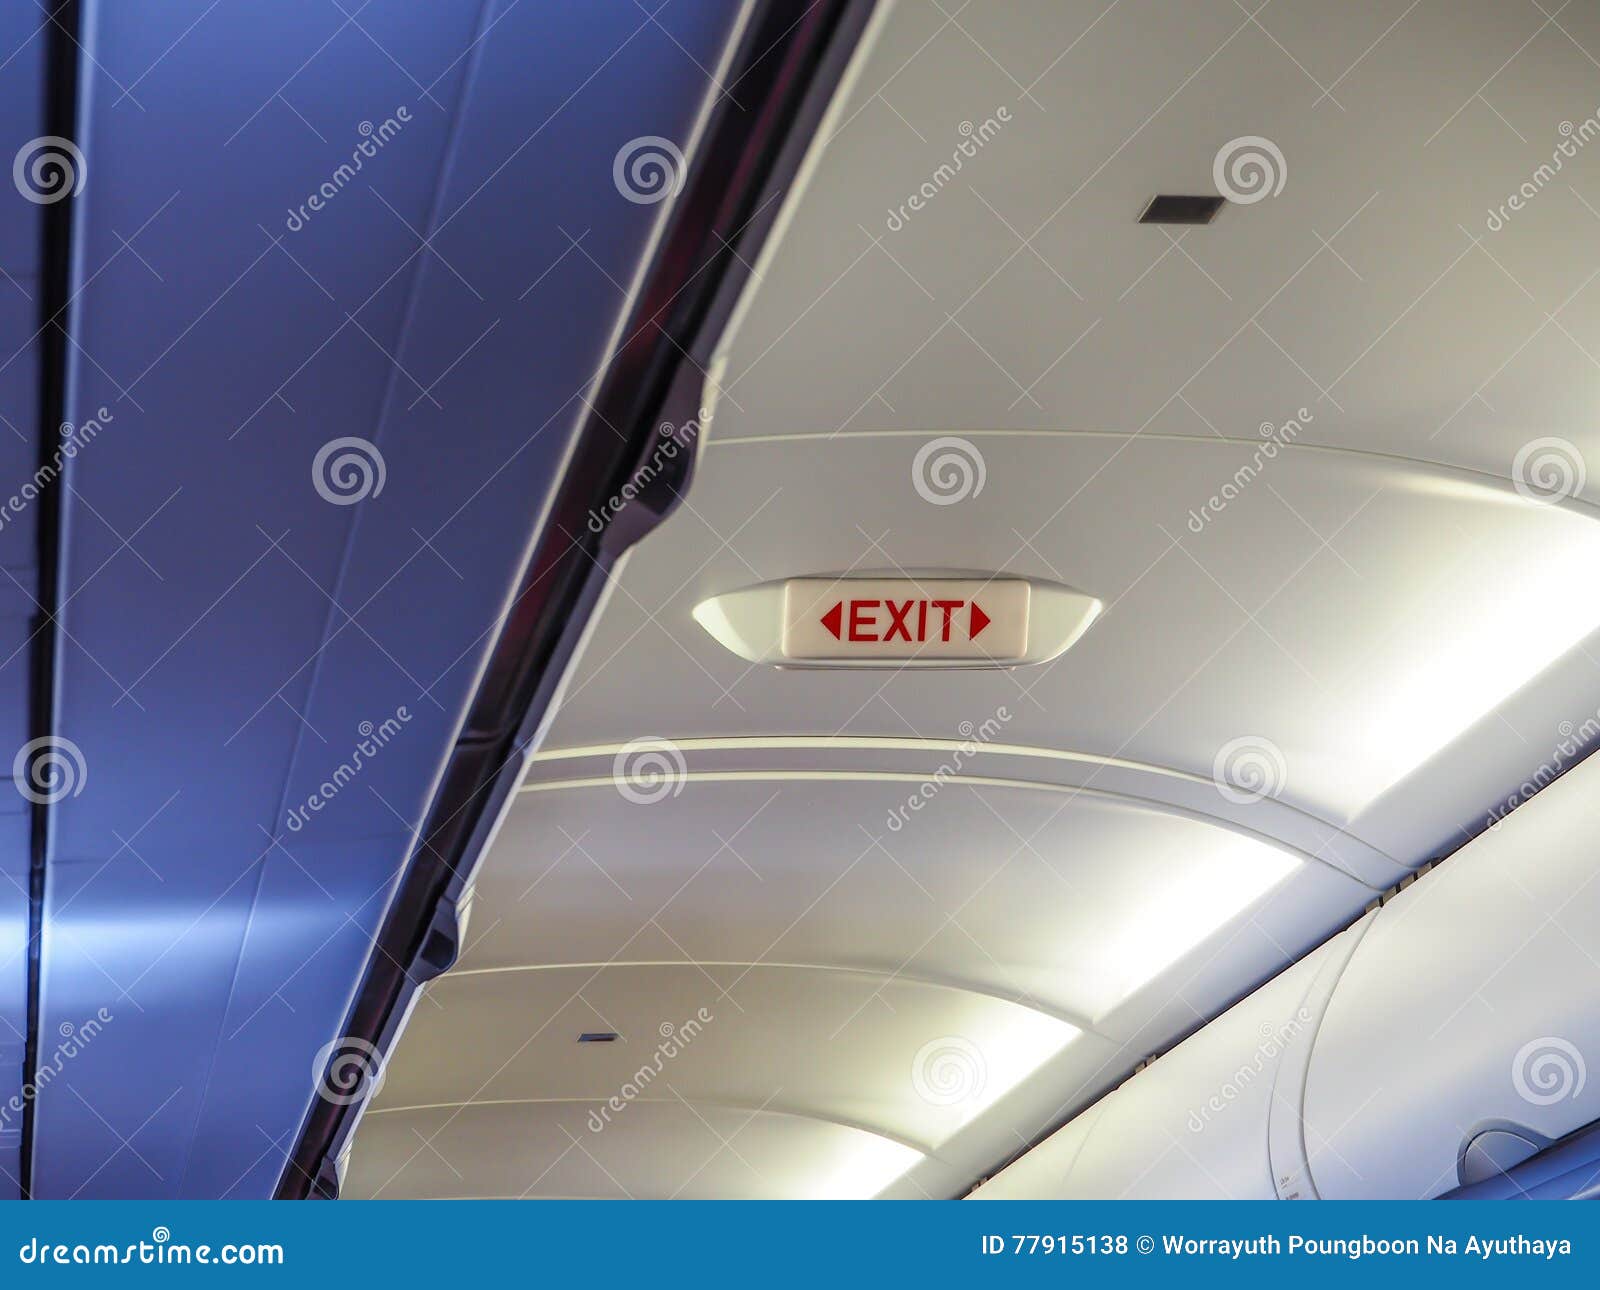 Exit Light Emergency On Plane Stock Photo Image of light, airplane 77915138